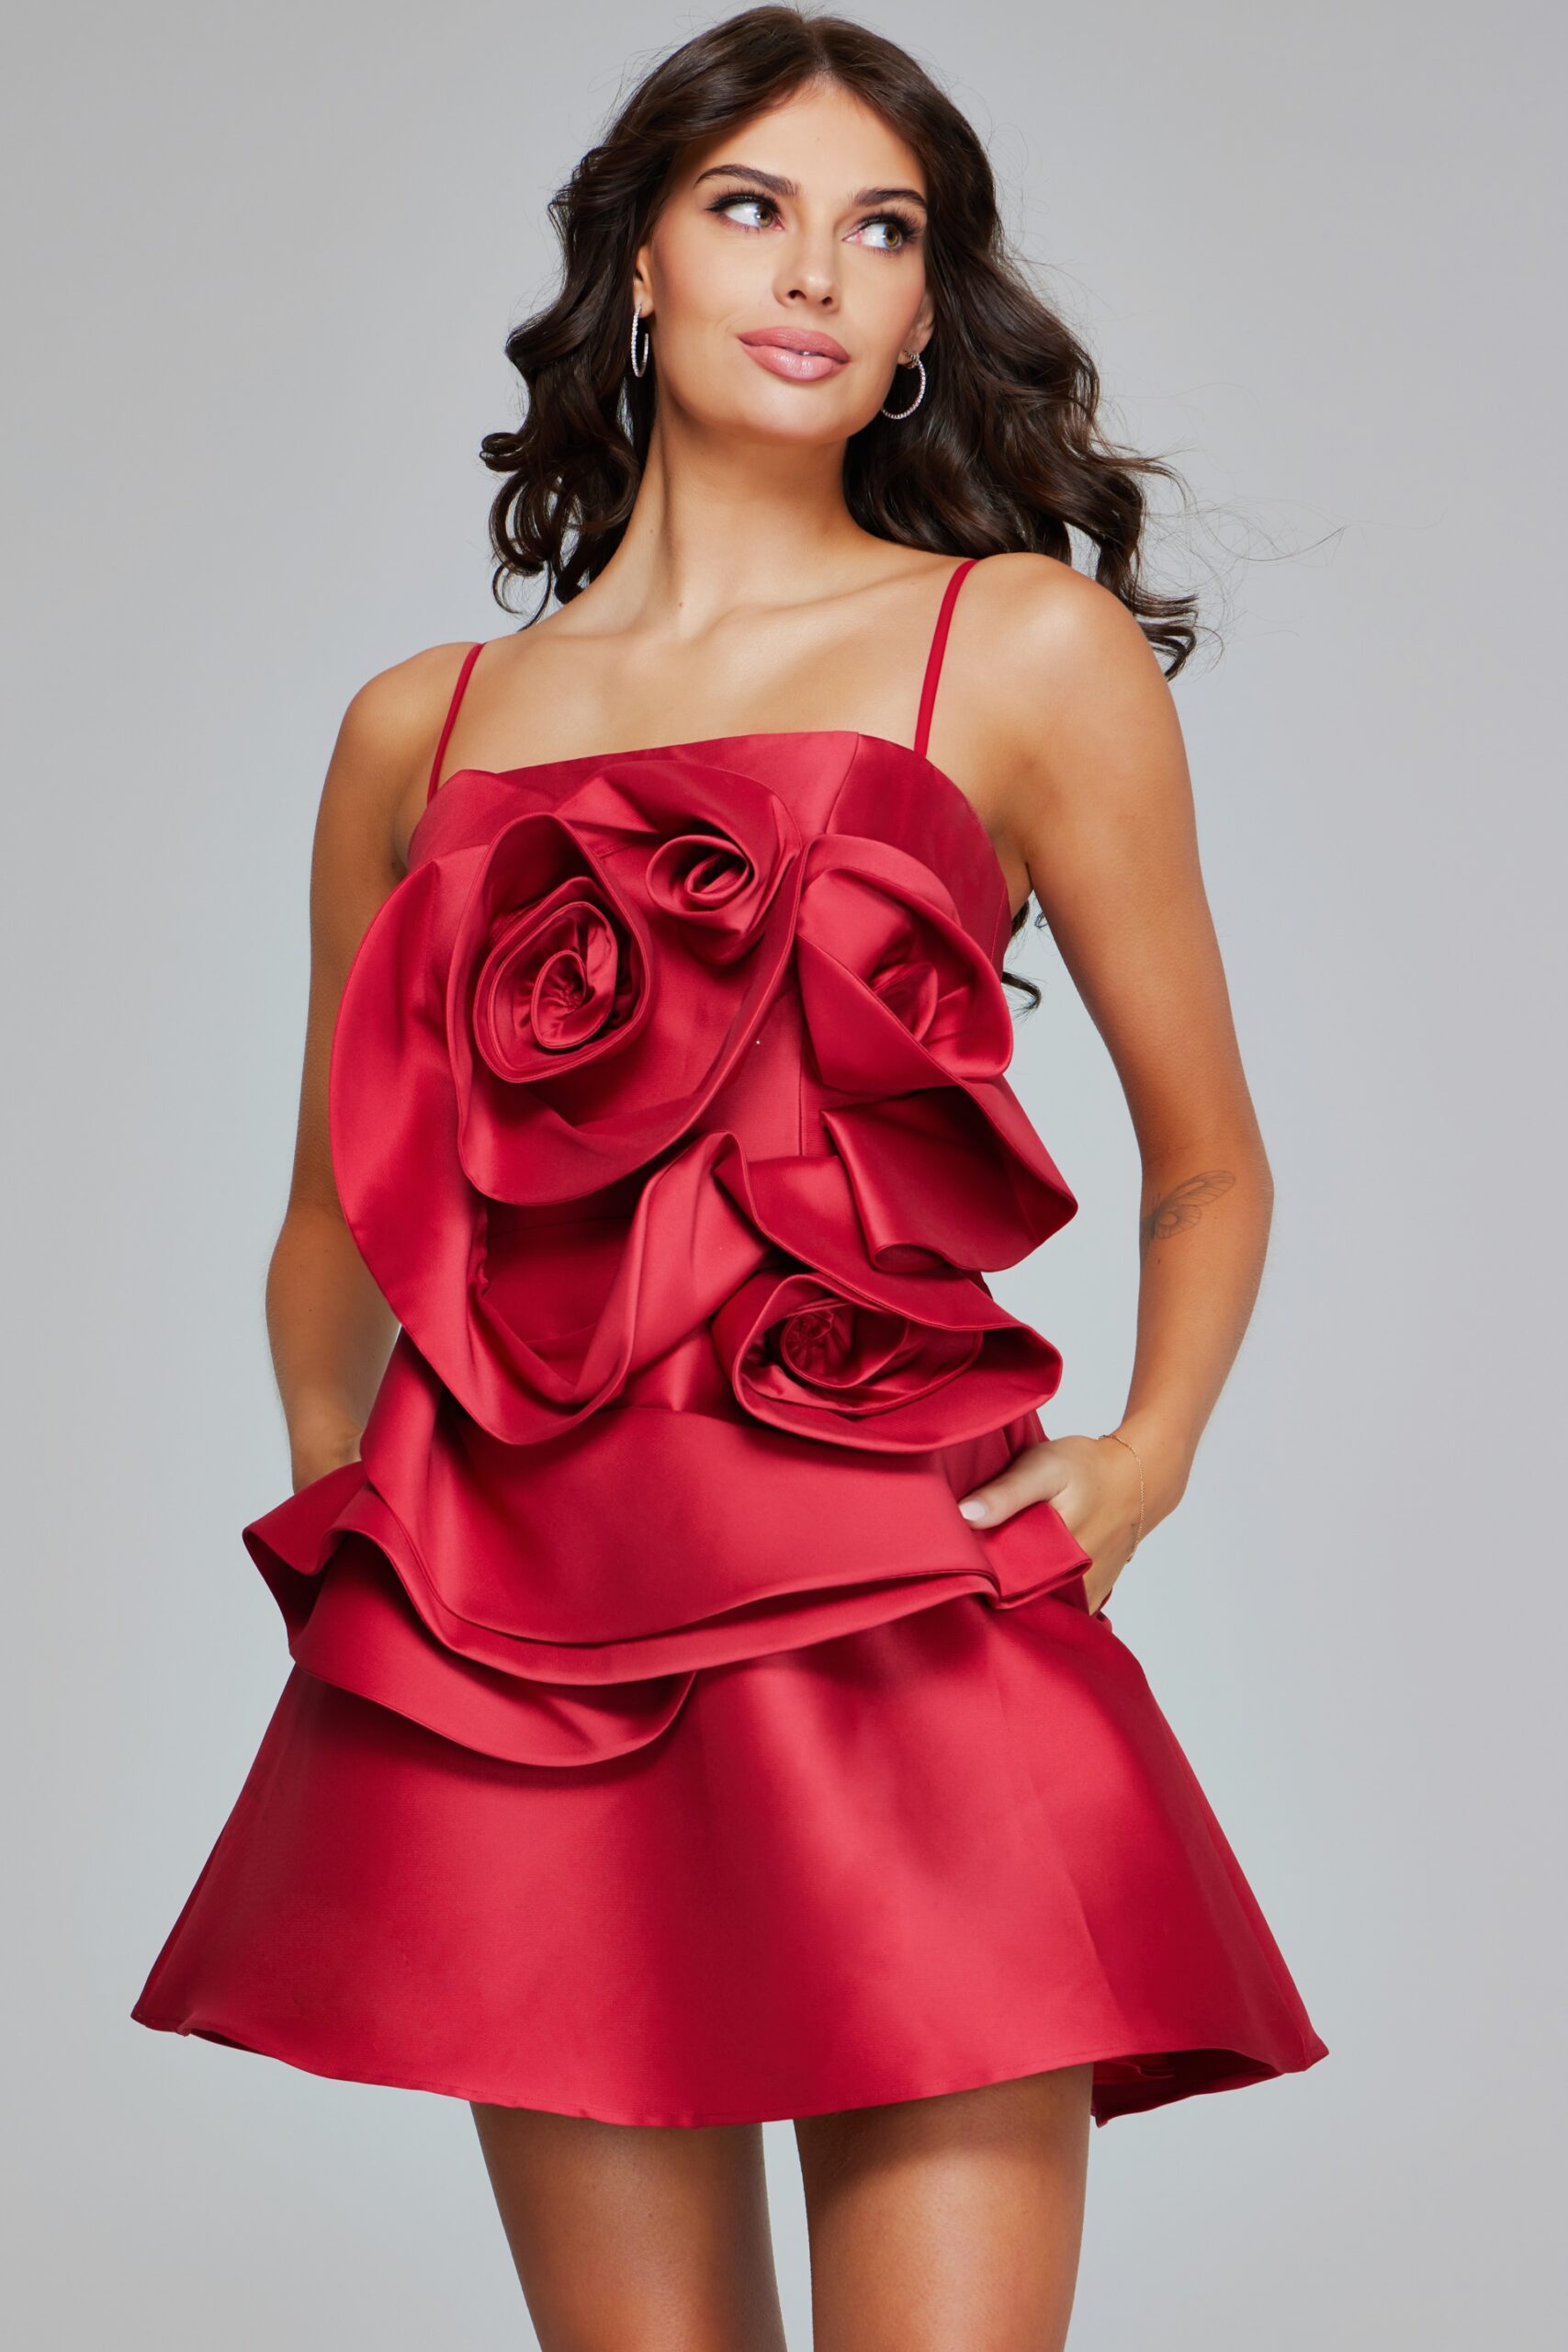 Model wearing Red Short Ruffled Dress 39750